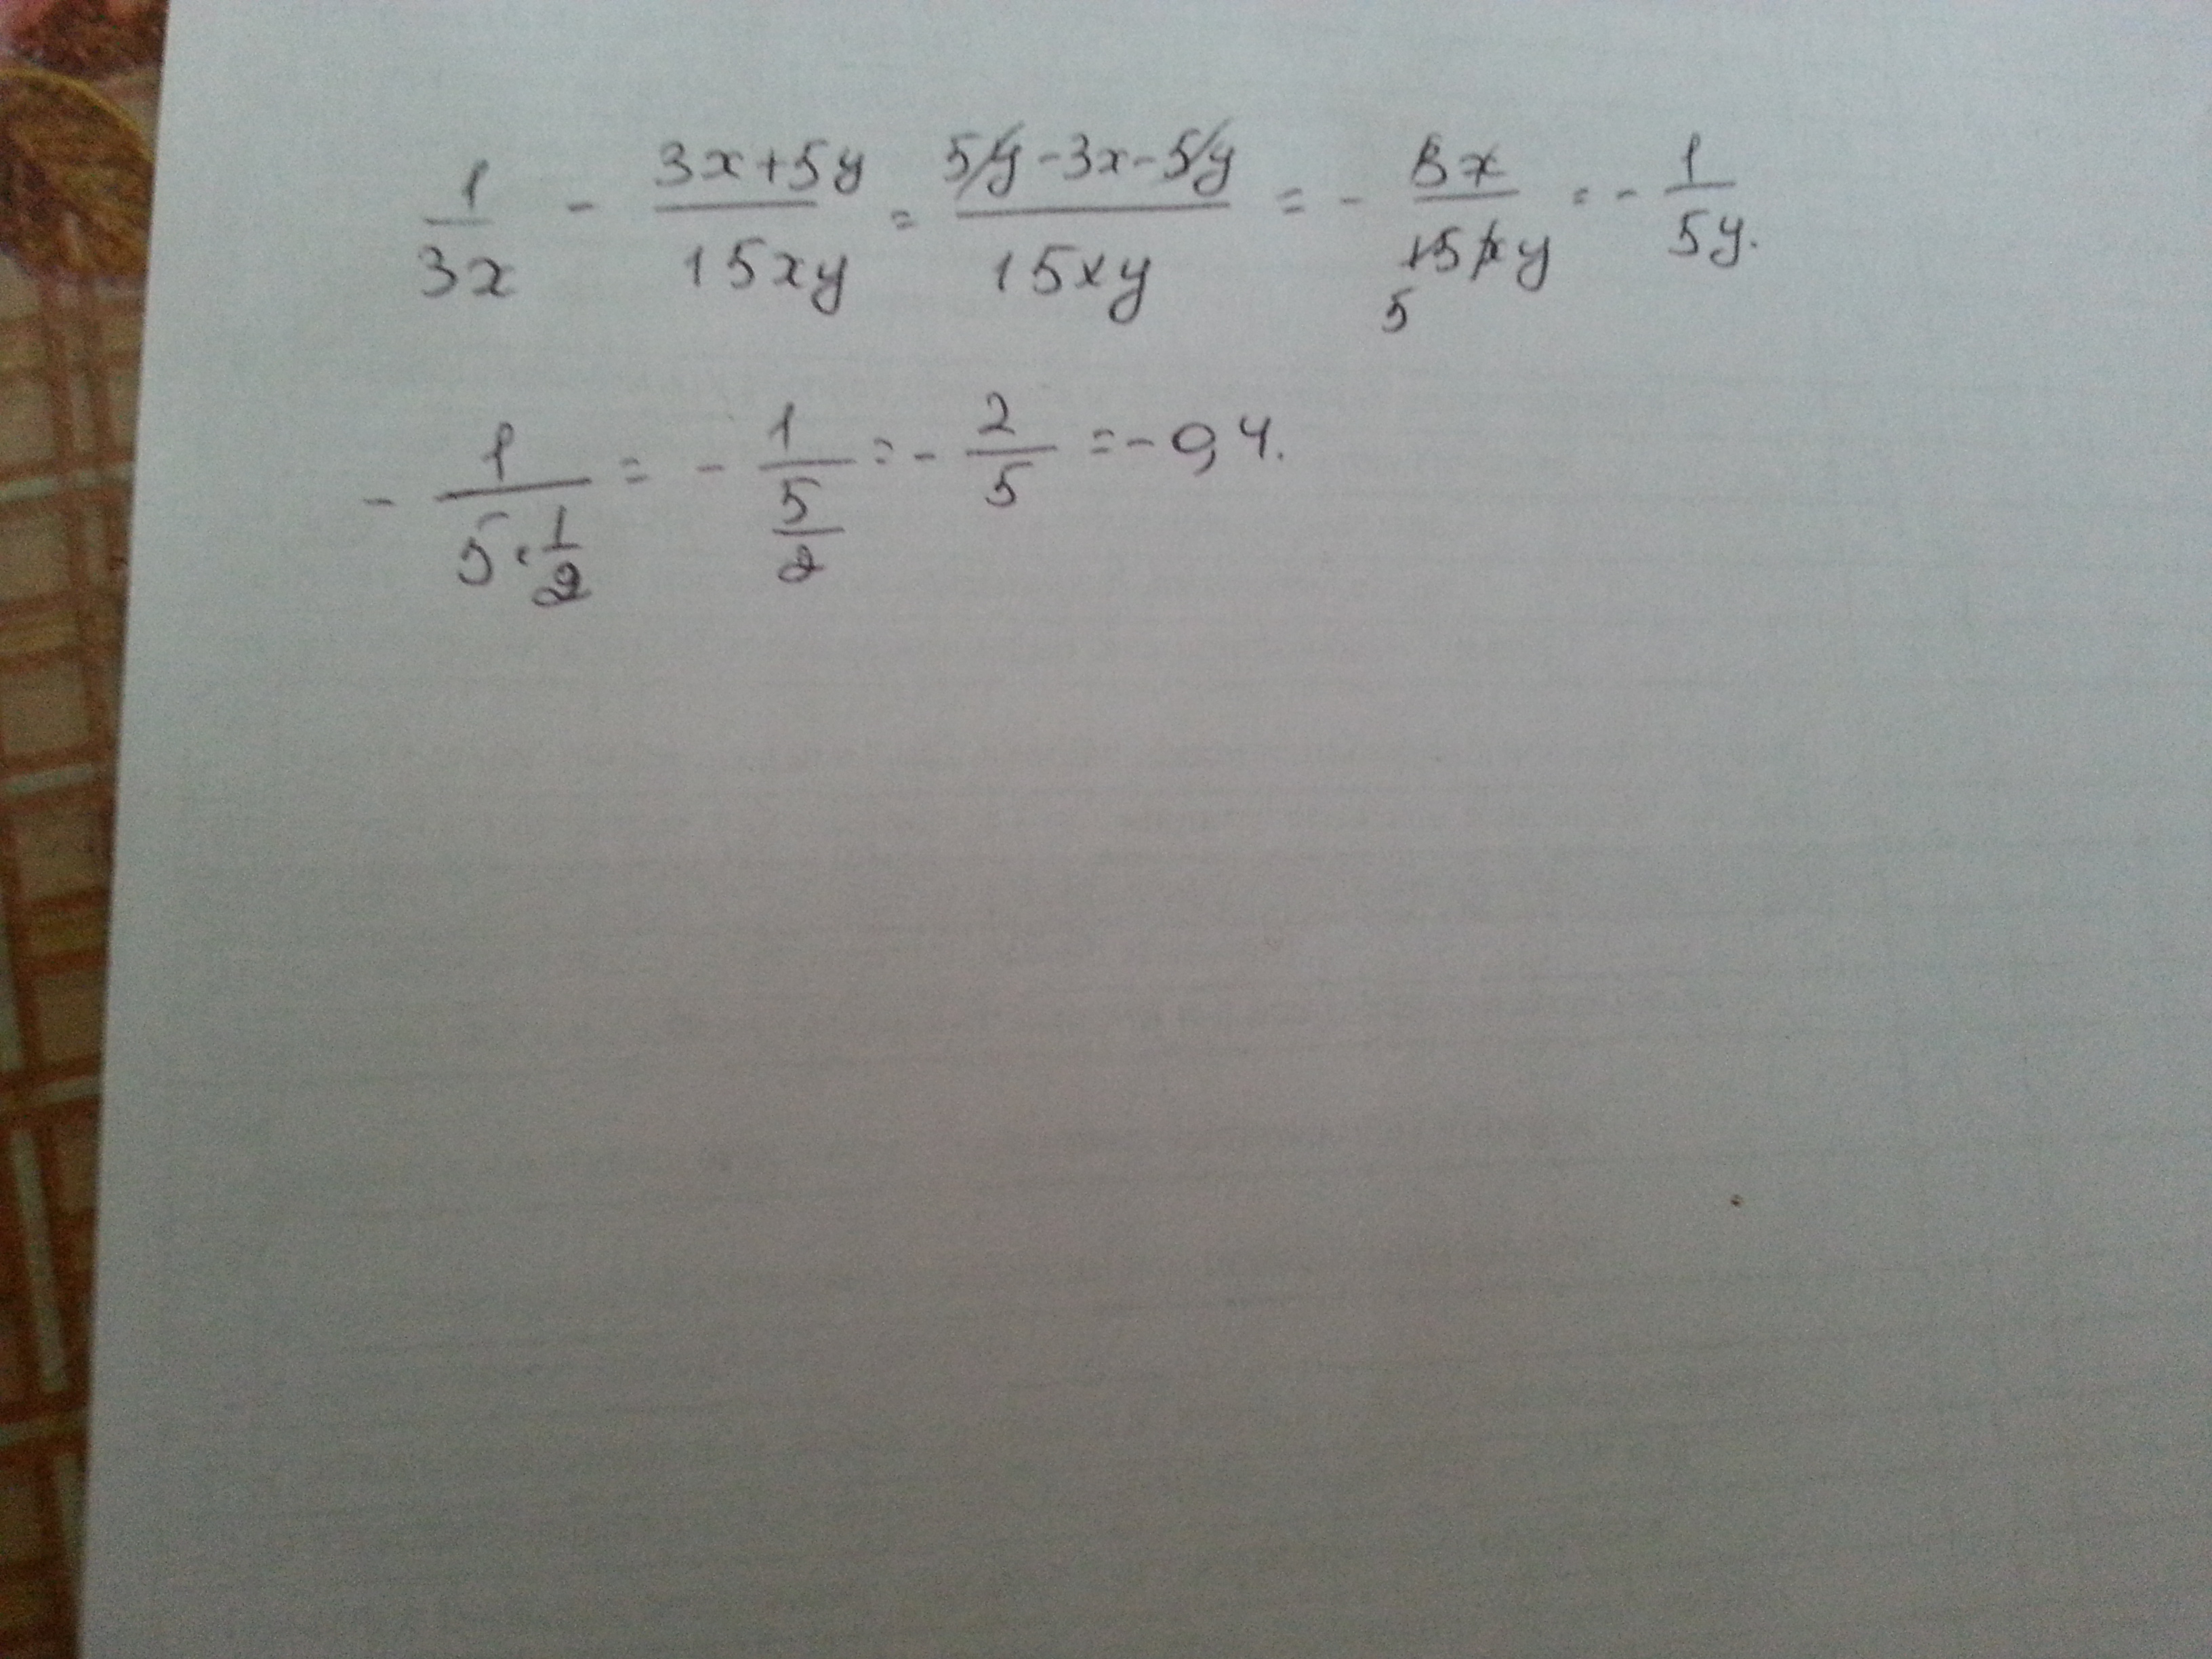 X 3 1 32 1 12. 1/3x-3x+5y/15xy при x корень из 45 y 1/2. Найдите значение выражения | минус 4| плюс |1 минус 3x| при x=2,4.. 1/3x 3x+5y/15xy. 1 3 5 3 15x y x XY + − при x = 45 , 12 y = ..